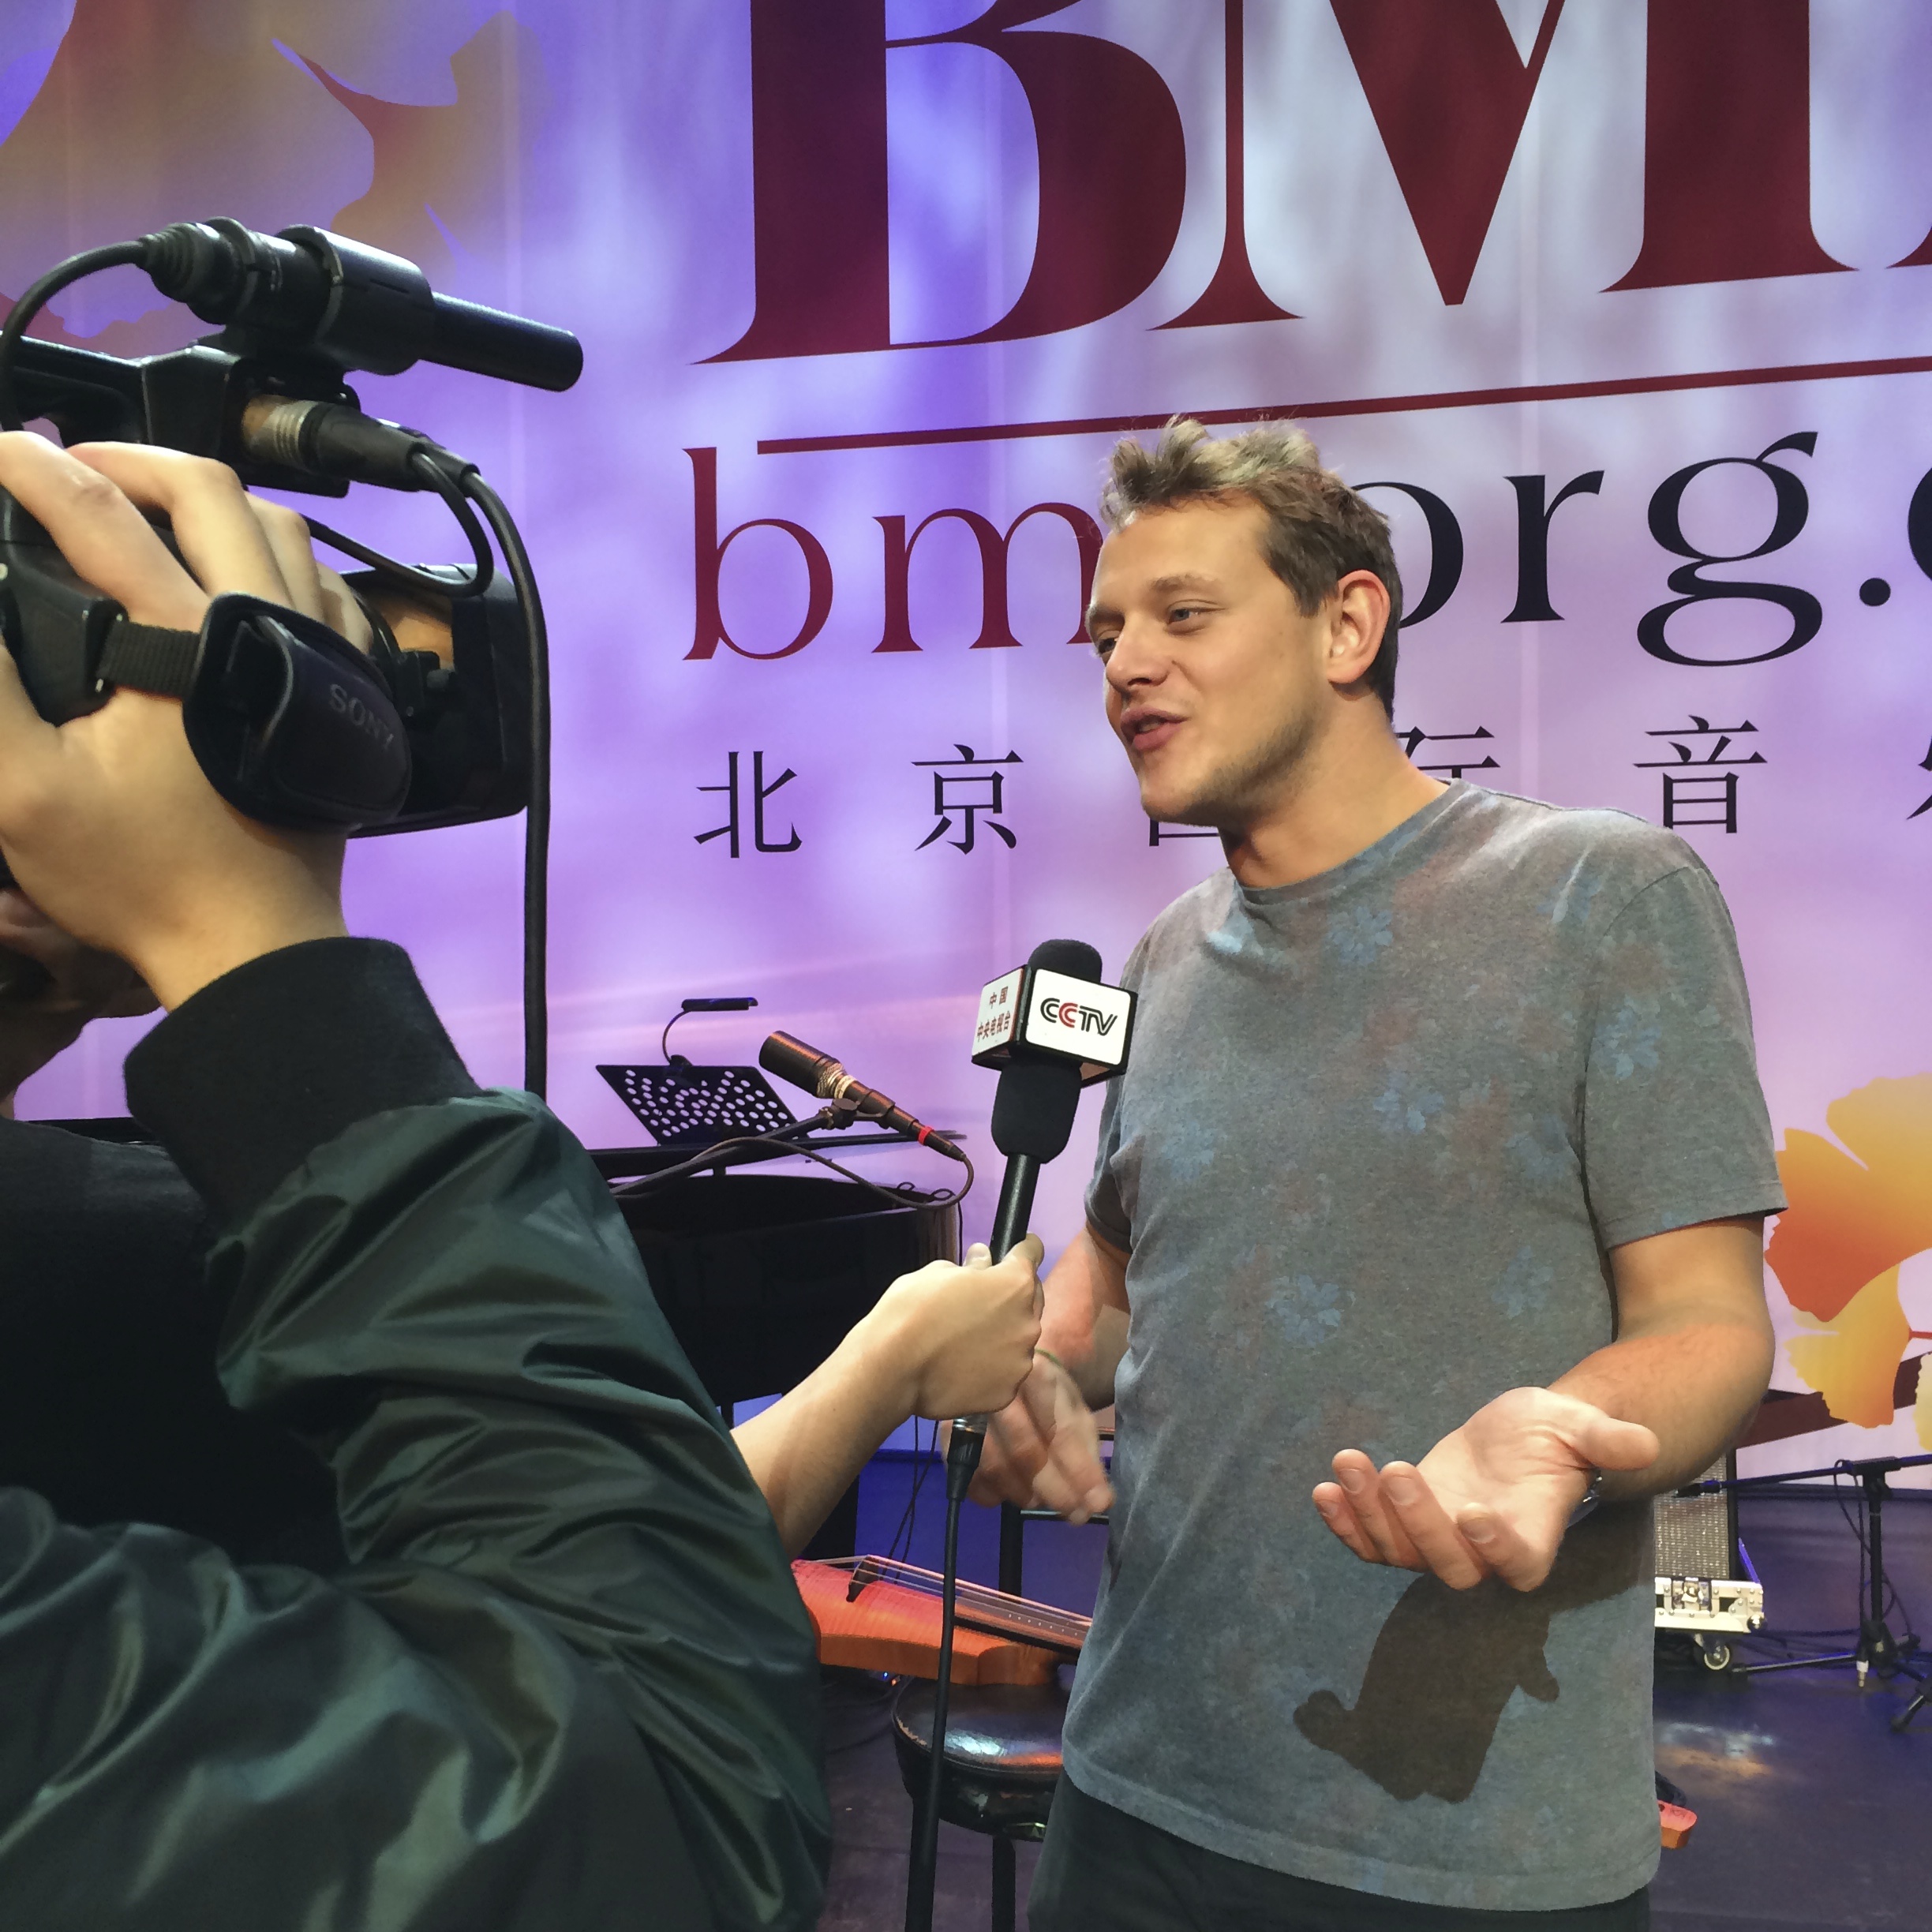 Neal TV interview BMF Stringfever China 2014 .jpg